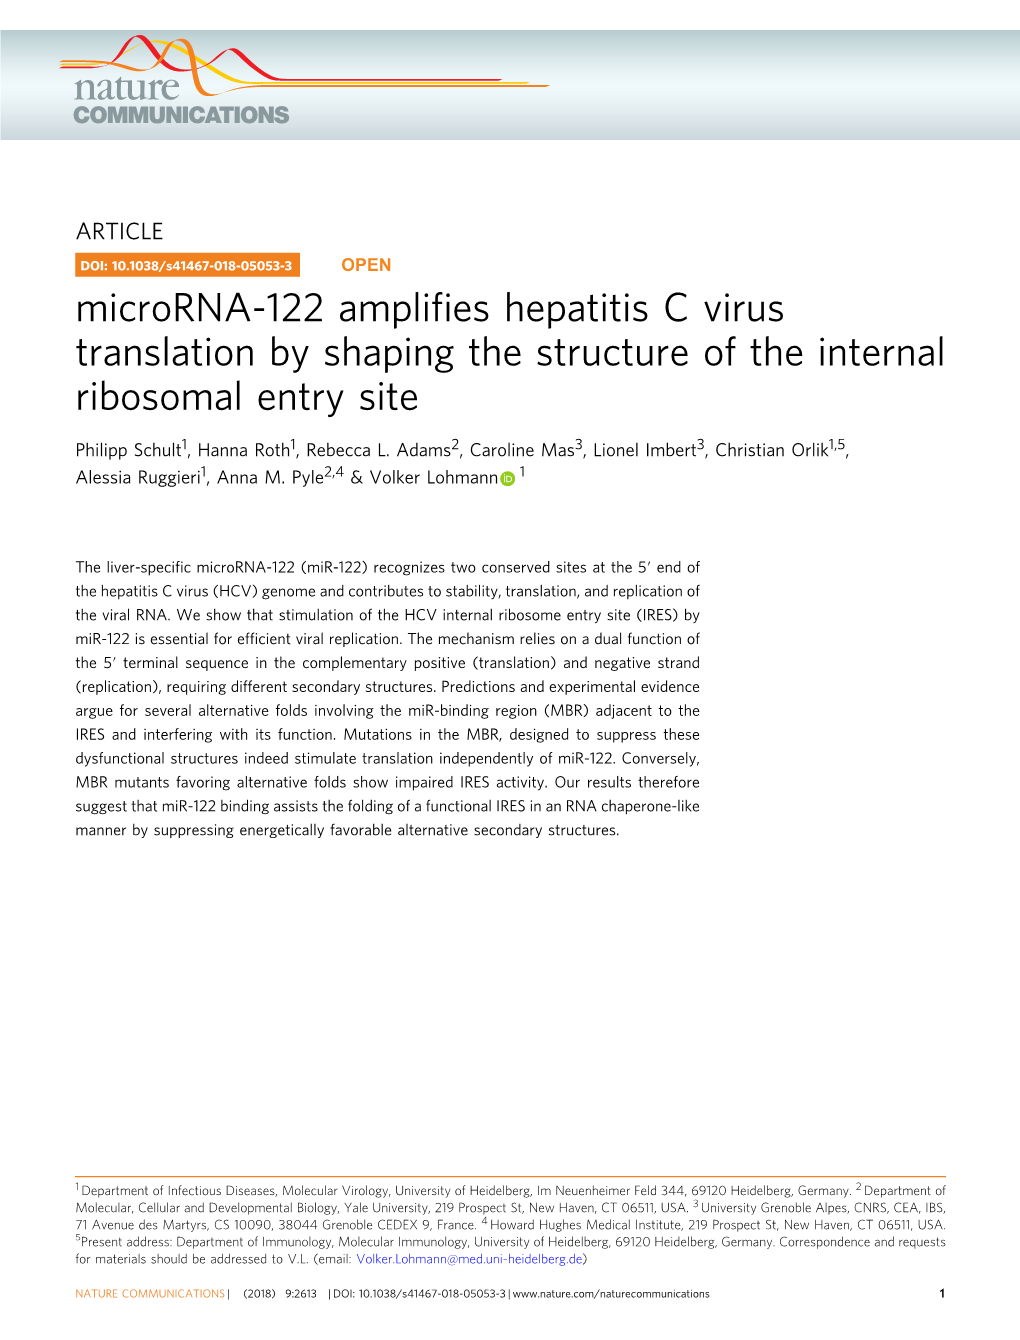 Microrna-122 Amplifies Hepatitis C Virus Translation by Shaping The